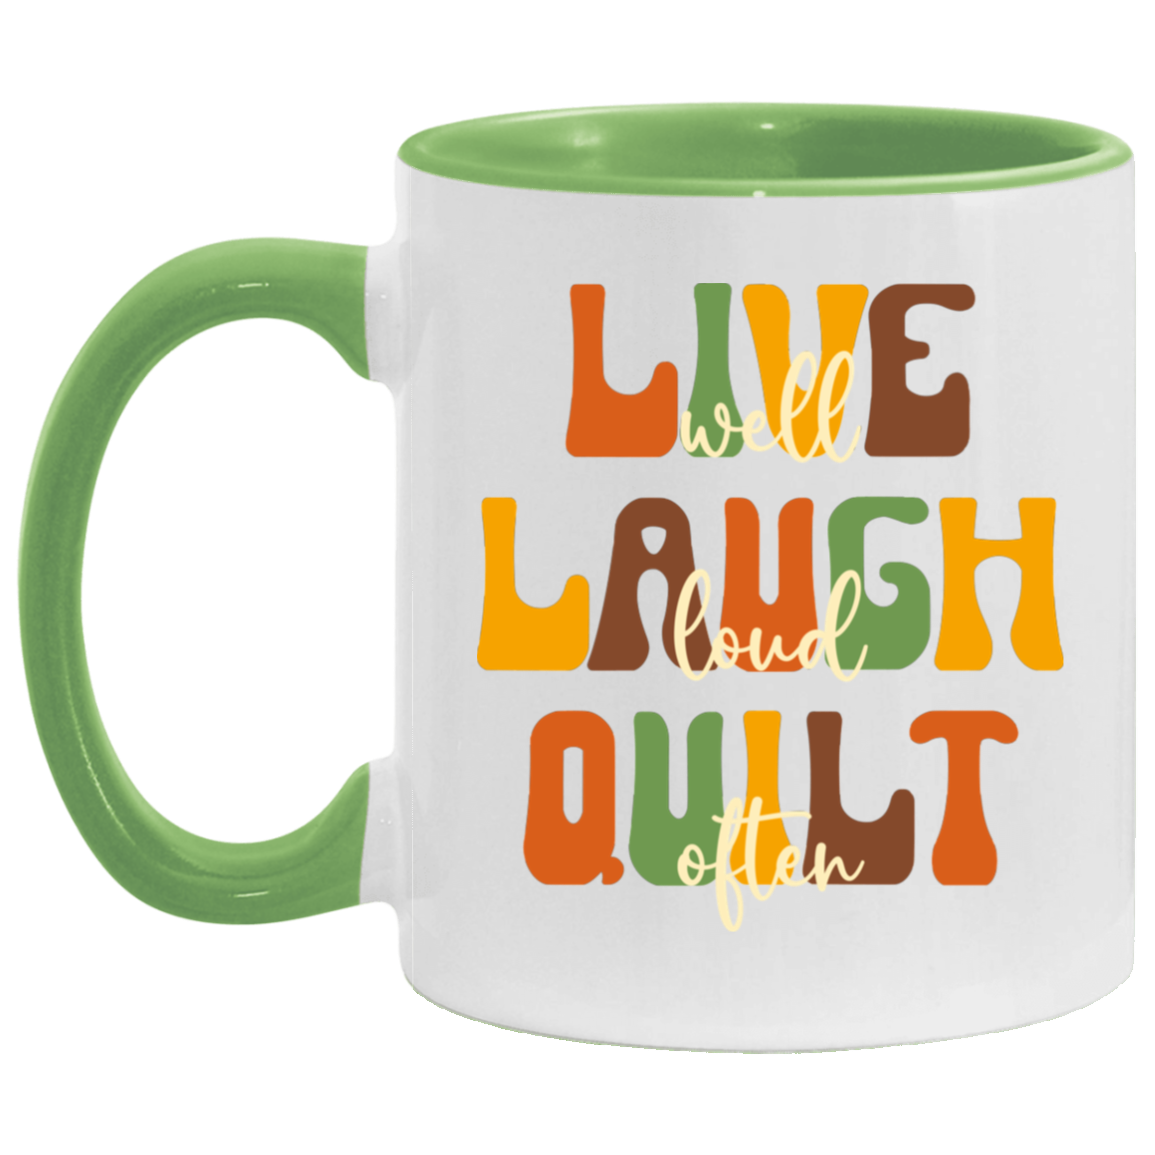 Live Well Quilt Often Mugs